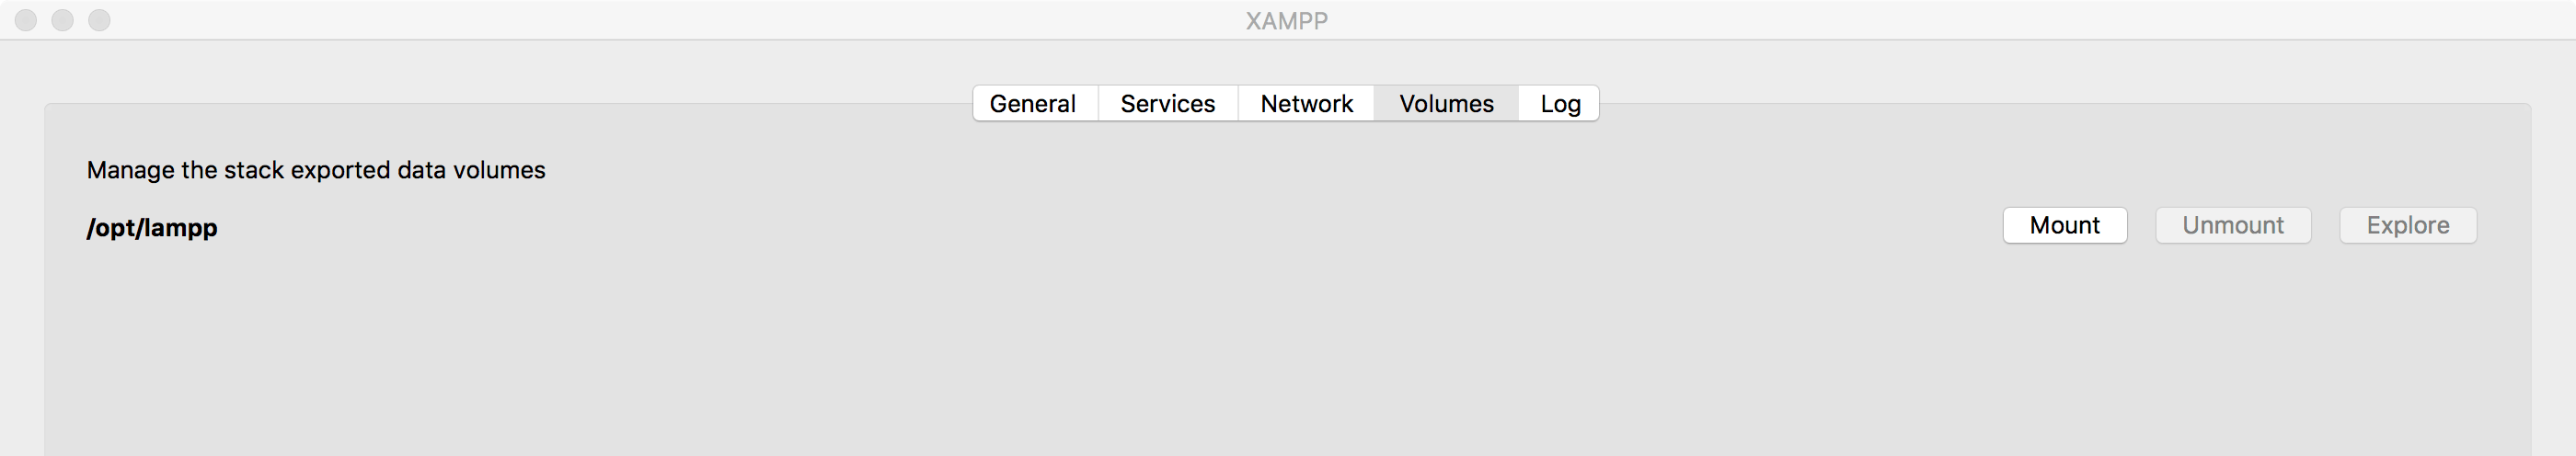 XAMPP Volumes